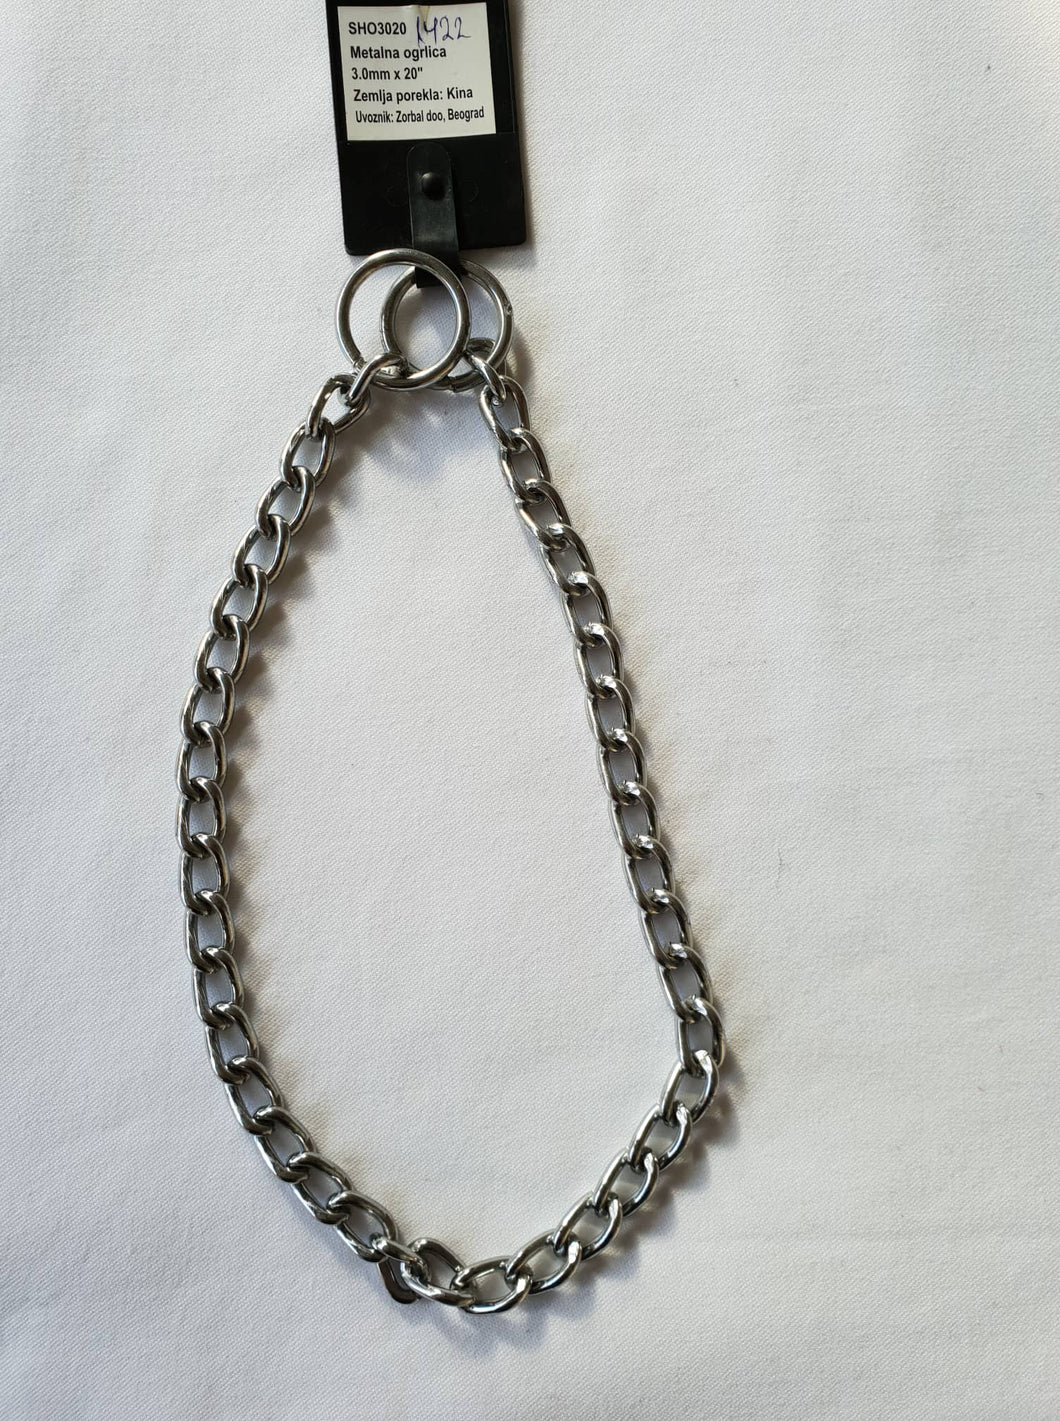 Metalna ogrlica 3.0mm x 20